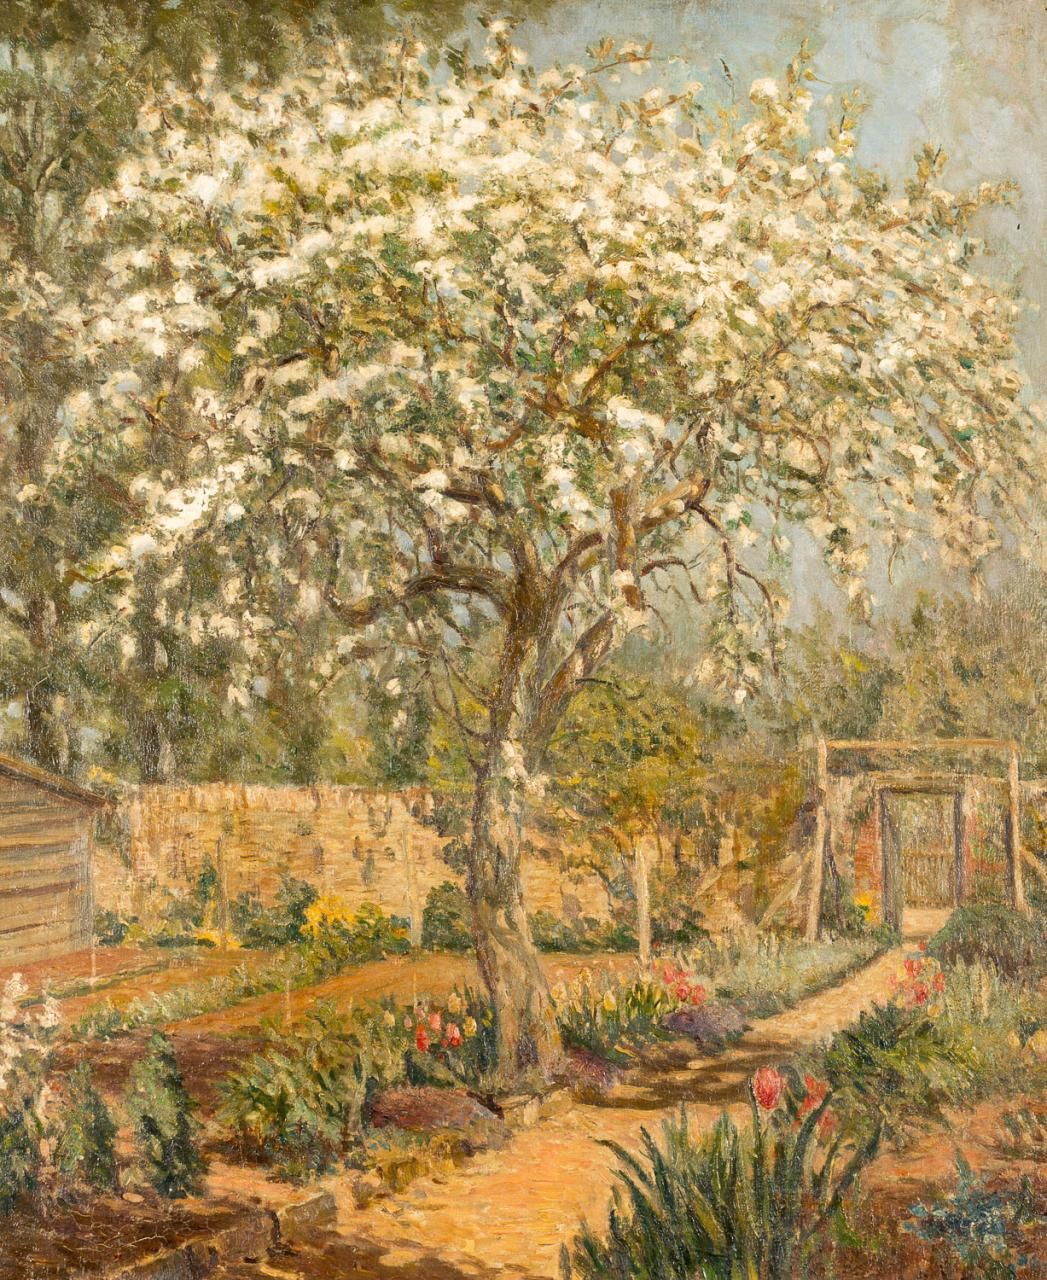 ESCUELA ESPAÑOLA, S. XX Landscape with almond tree
Oil on canvas
60 x 50 cm